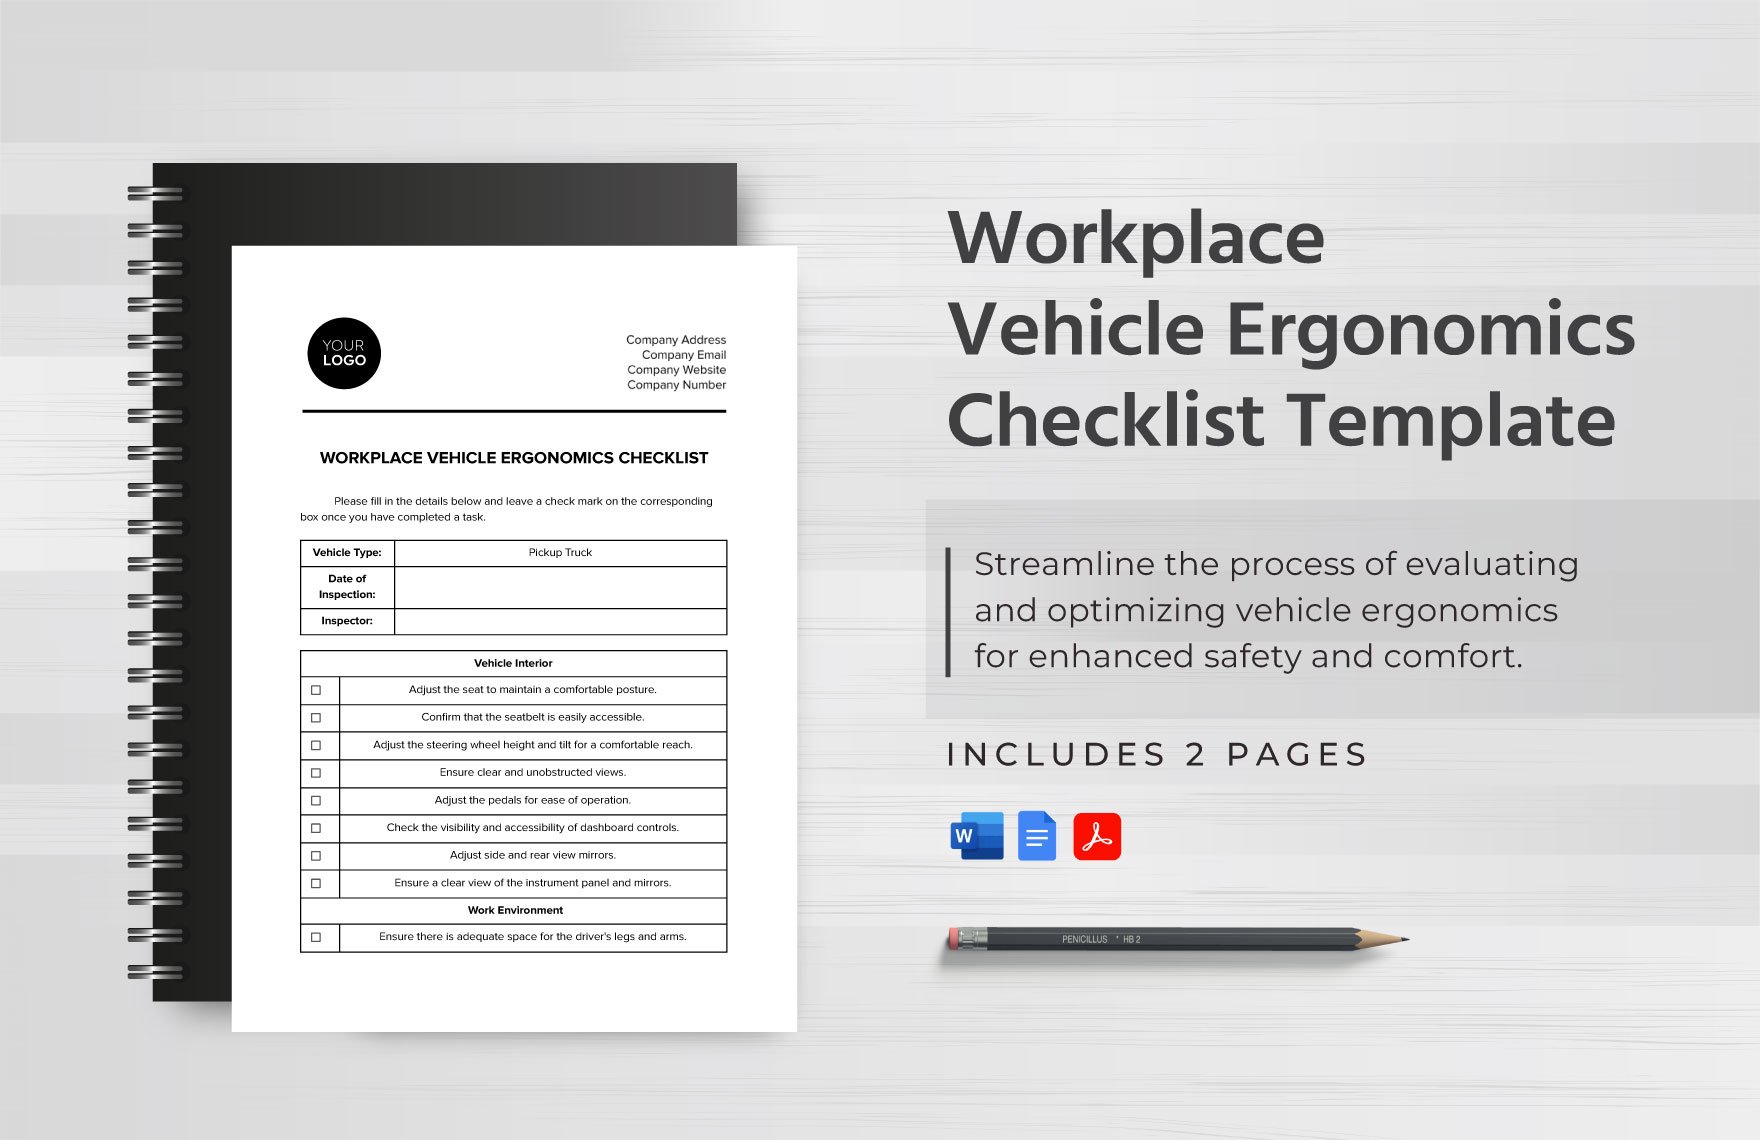 Workplace Vehicle Ergonomics Checklist Template